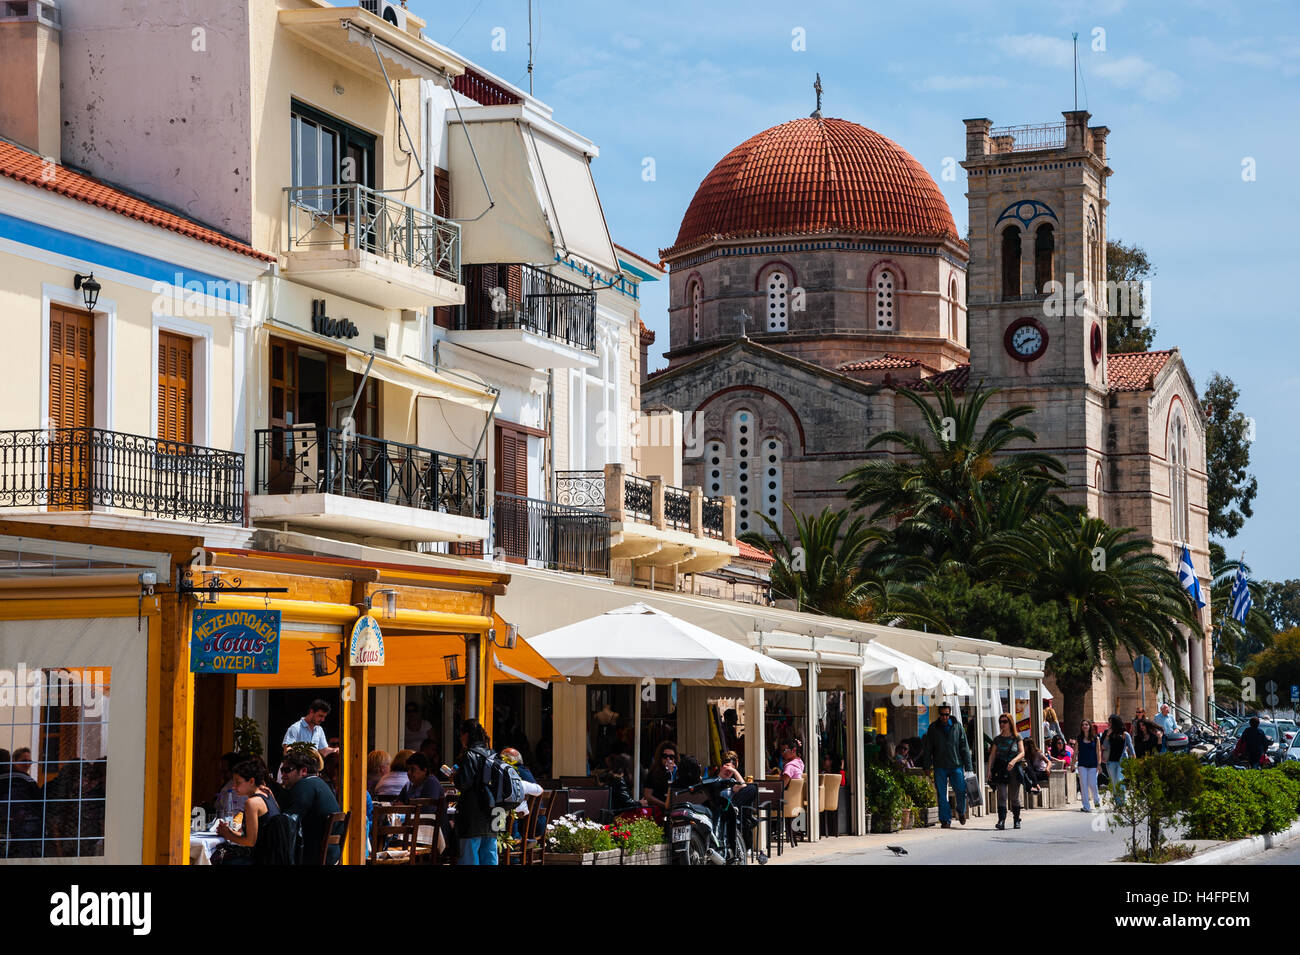 Aegina is one of the Saronic Islands of Greece in the Saronic Gulf. Stock Photo